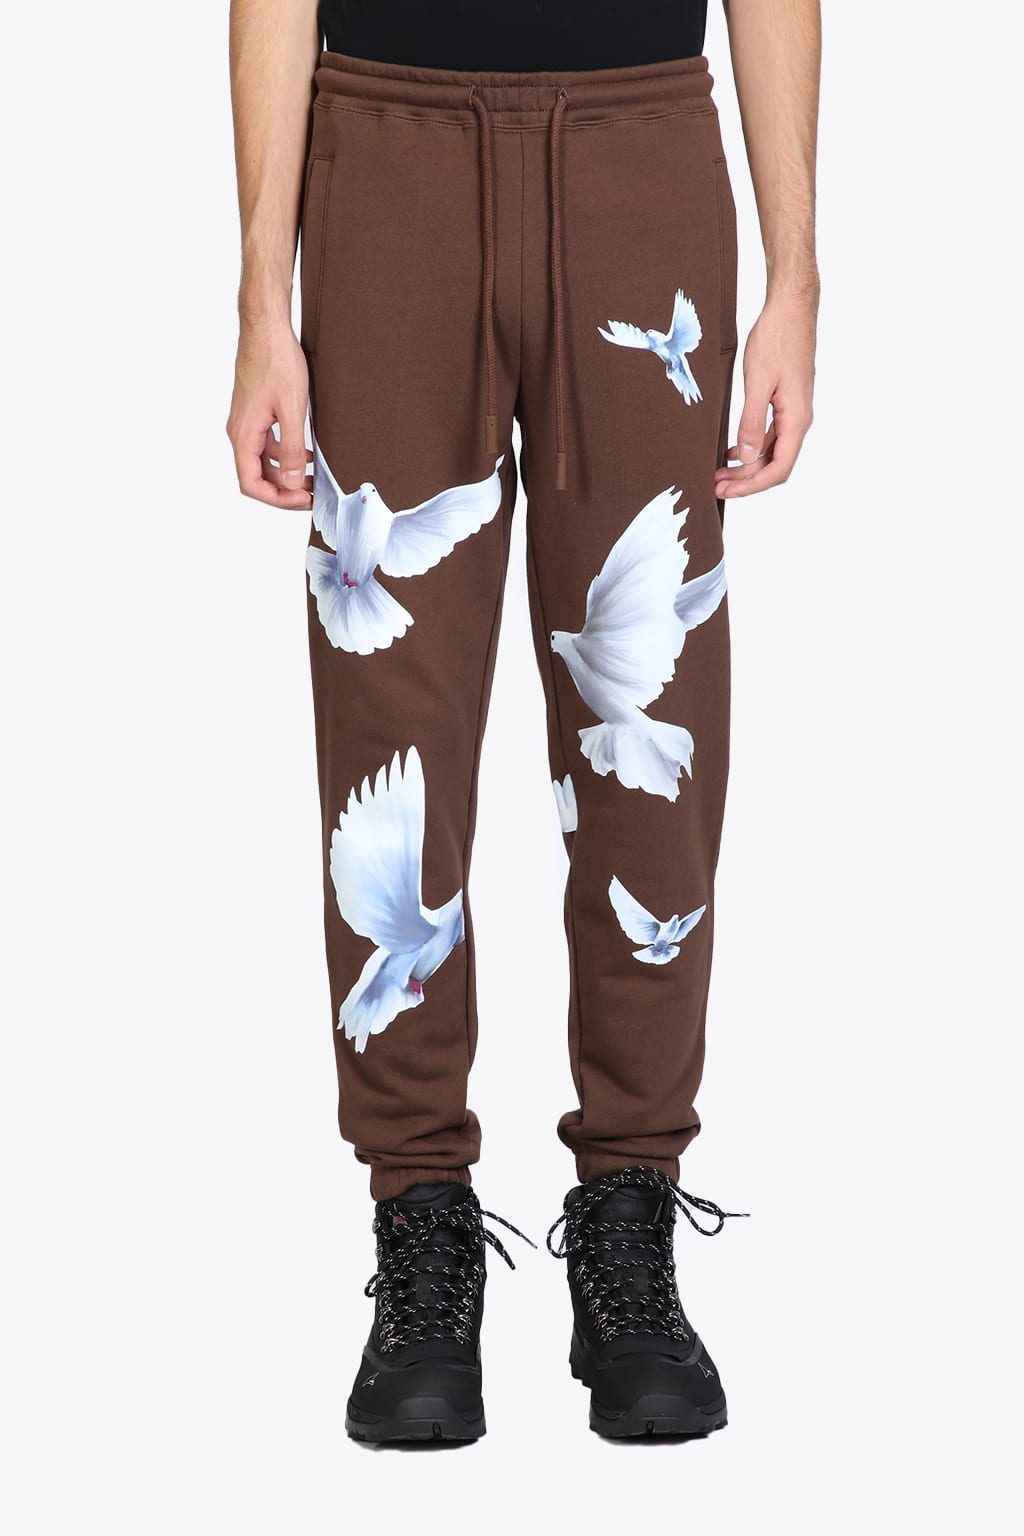 3.Paradis Freedom Birds Lounge Pants Brown sweatpants with dove print - Freedom birds lounge pants